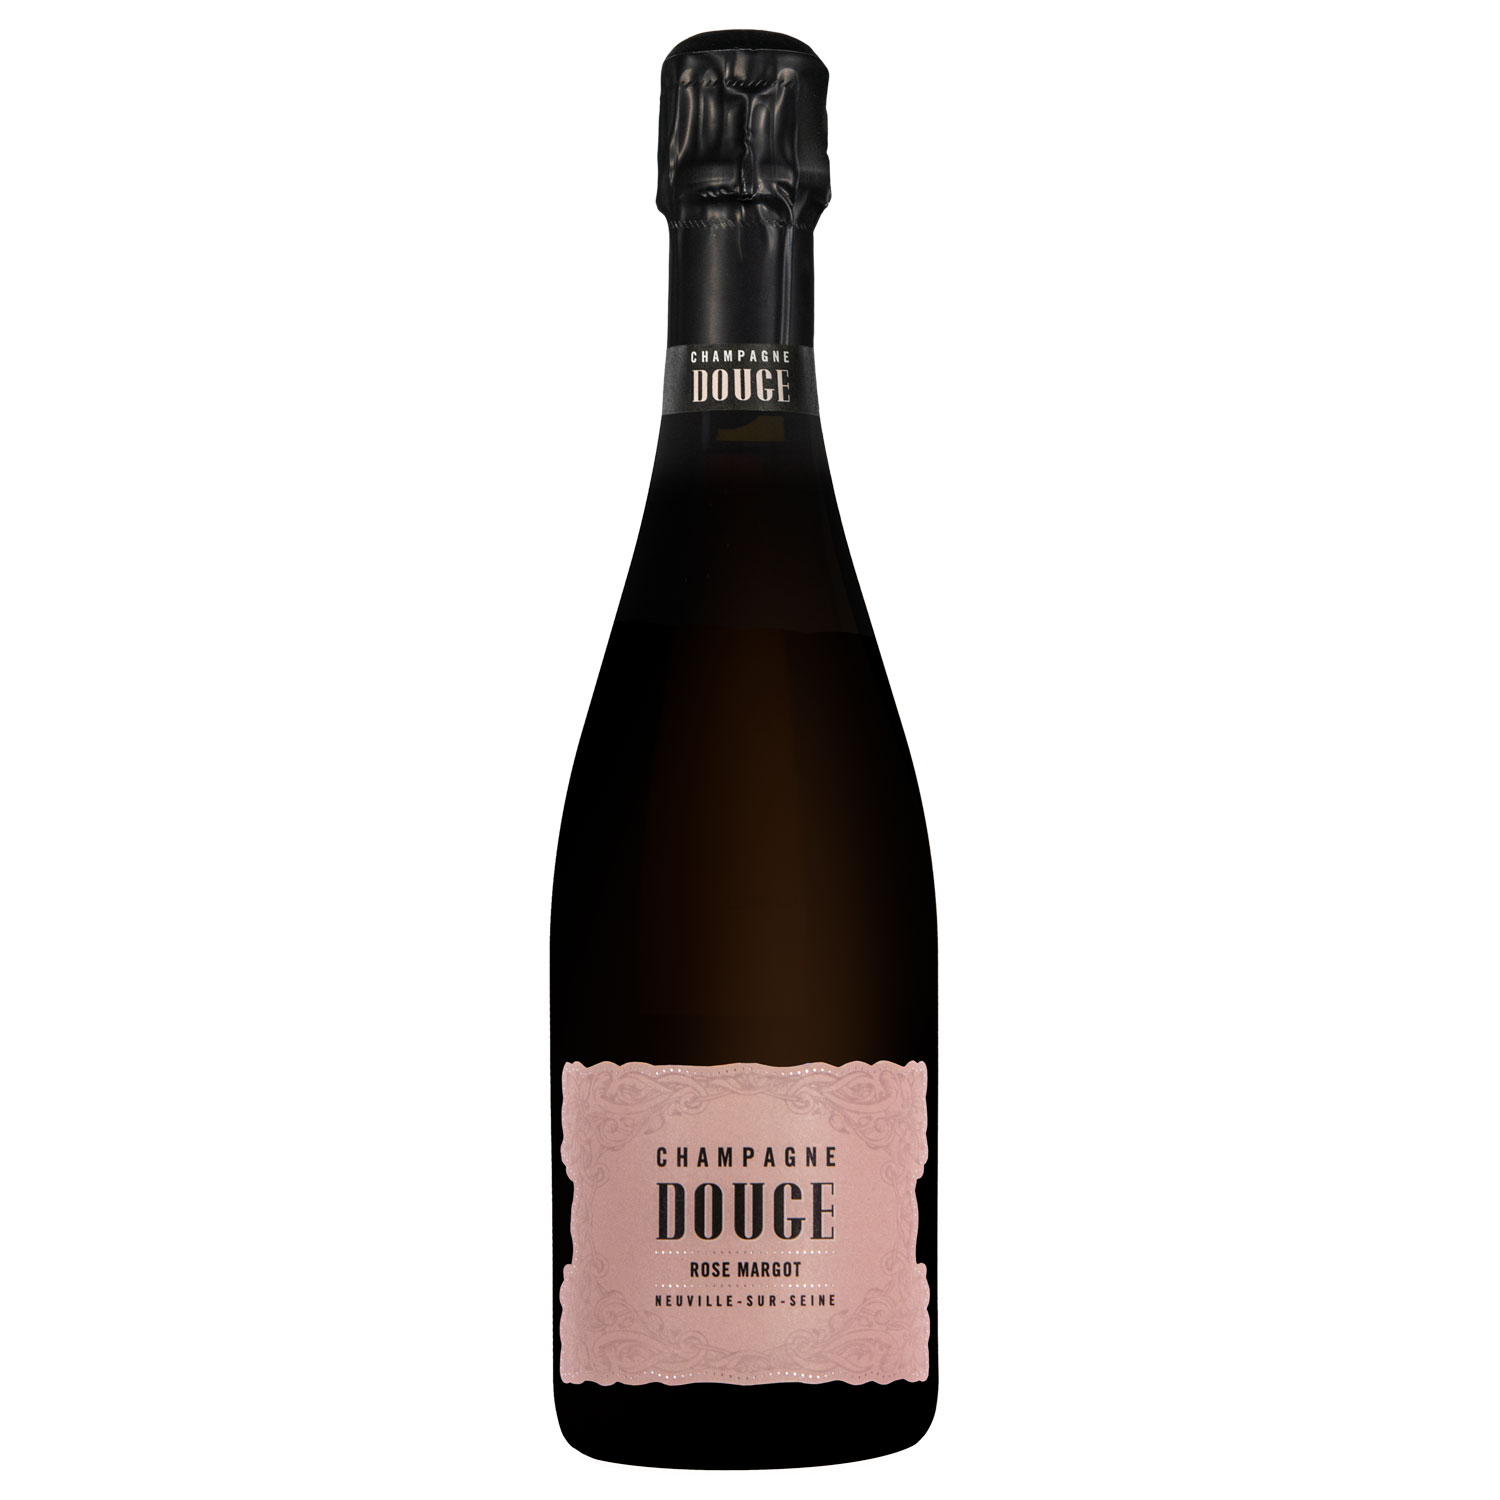 Champagne Douge: Rosé Margot